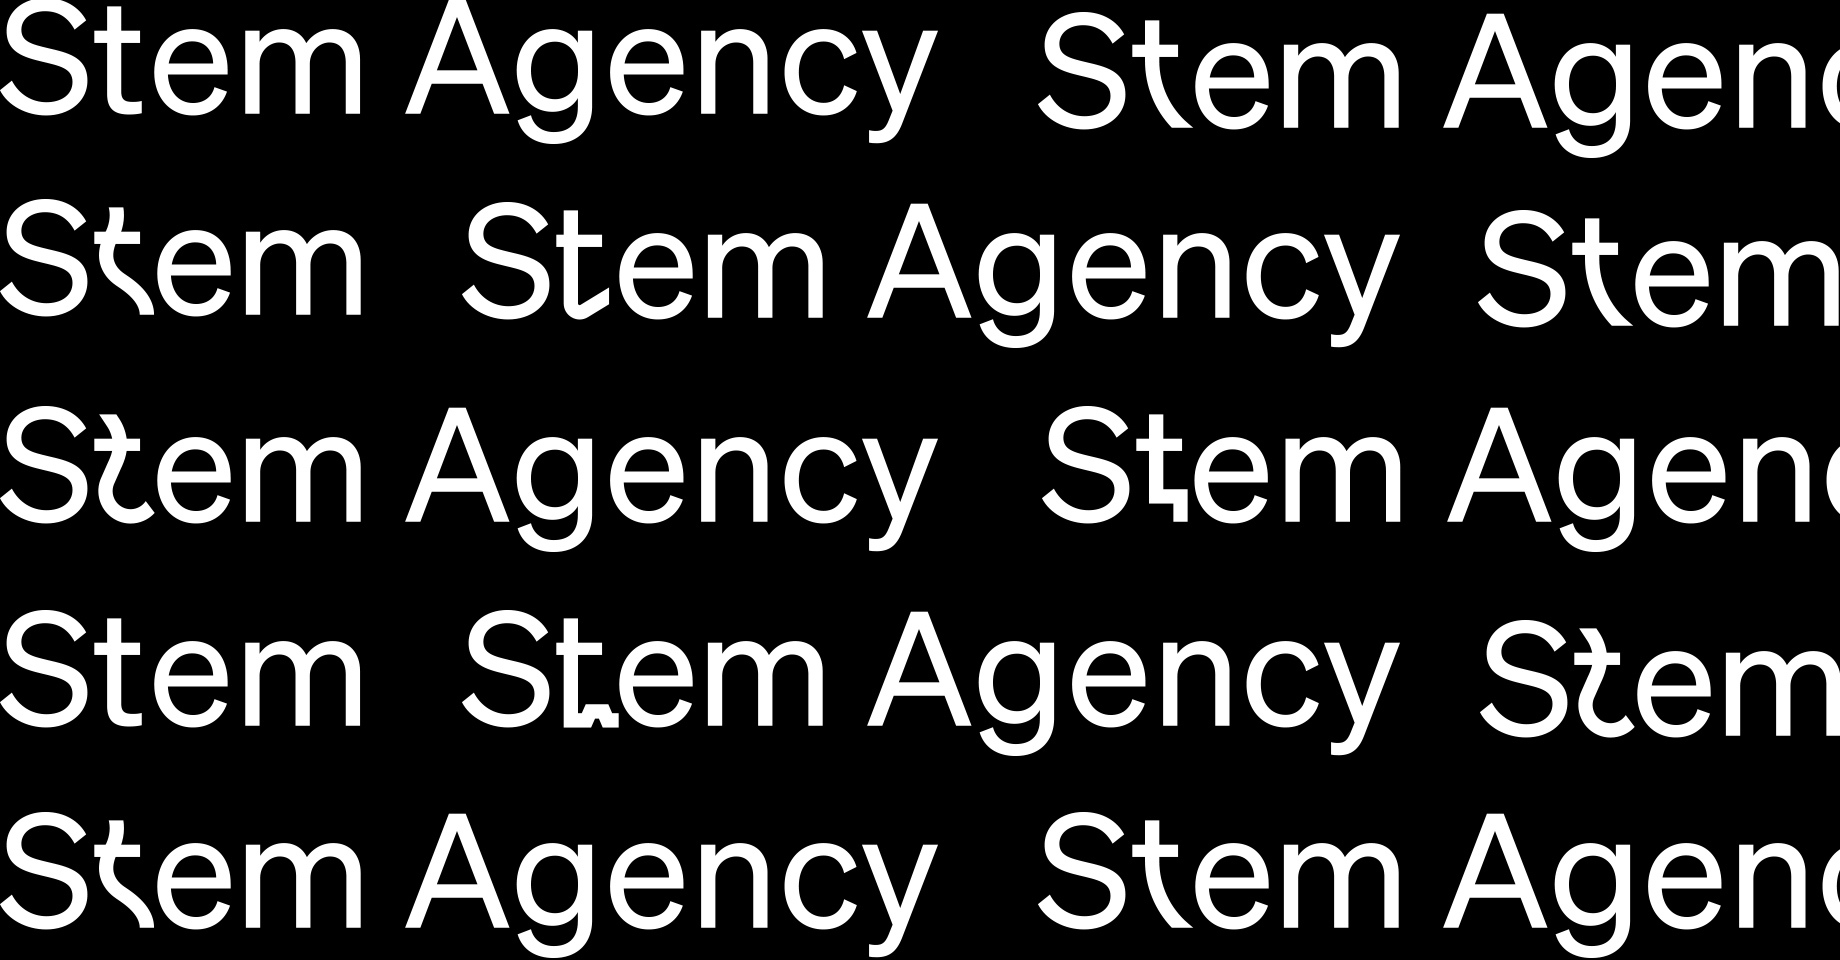 Stem Agency